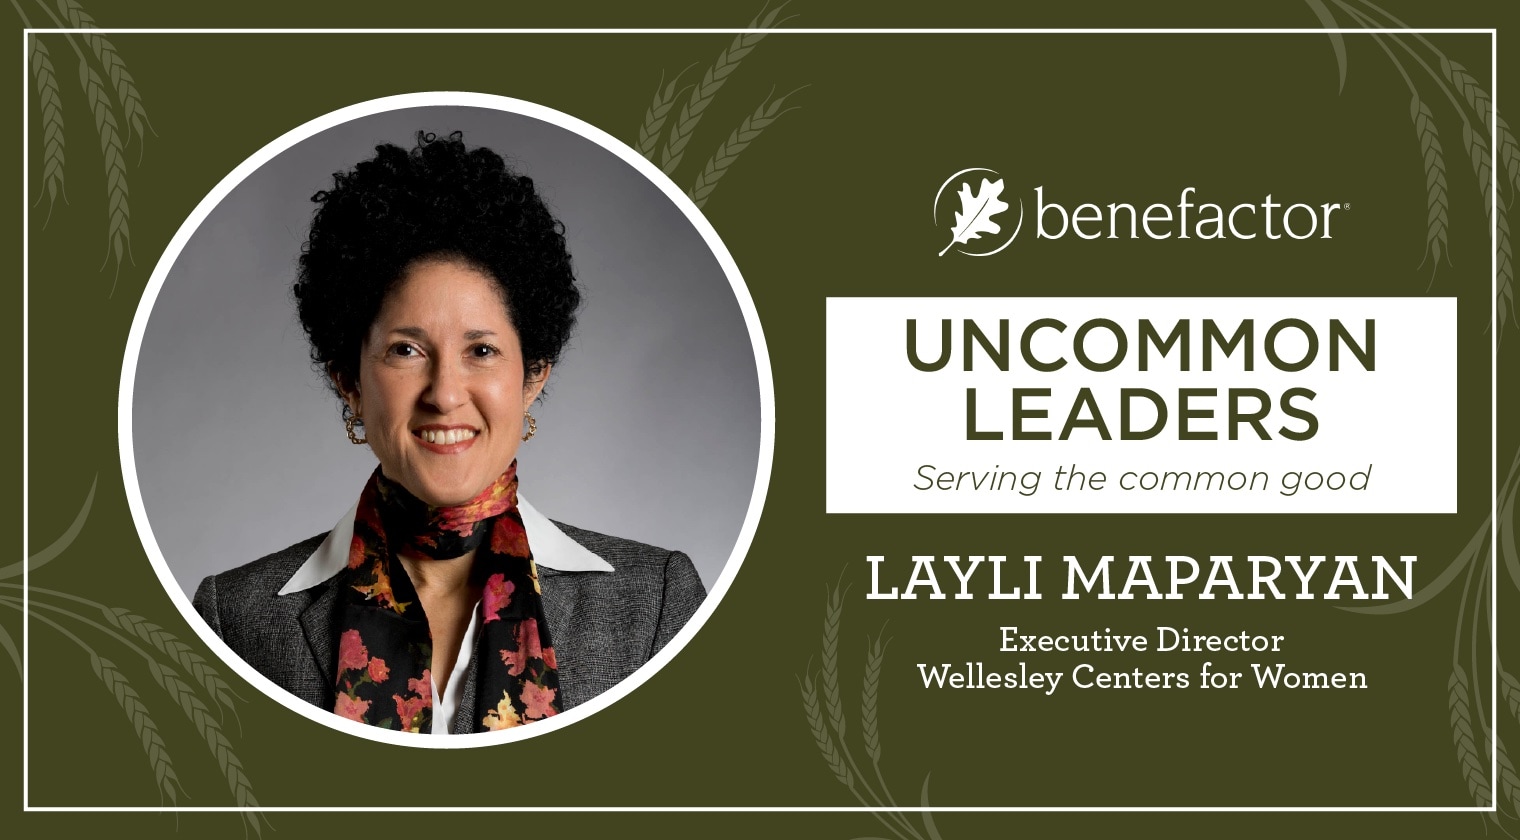 Layli Maparyan leadership series featured image with headshot.